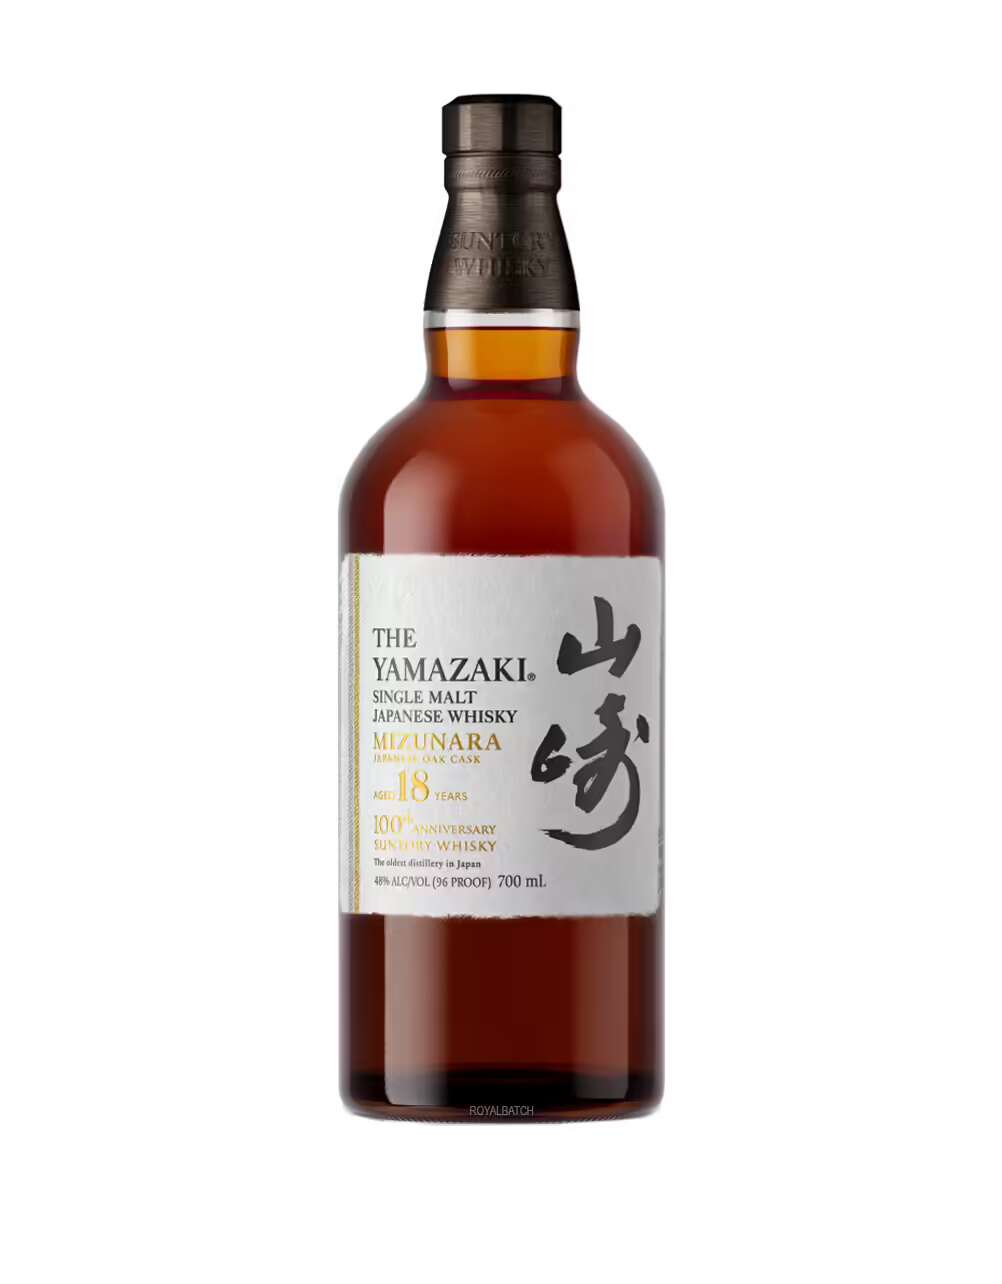 The Yamazaki 18 Year Old 100th Anniversary Japanese Whisky